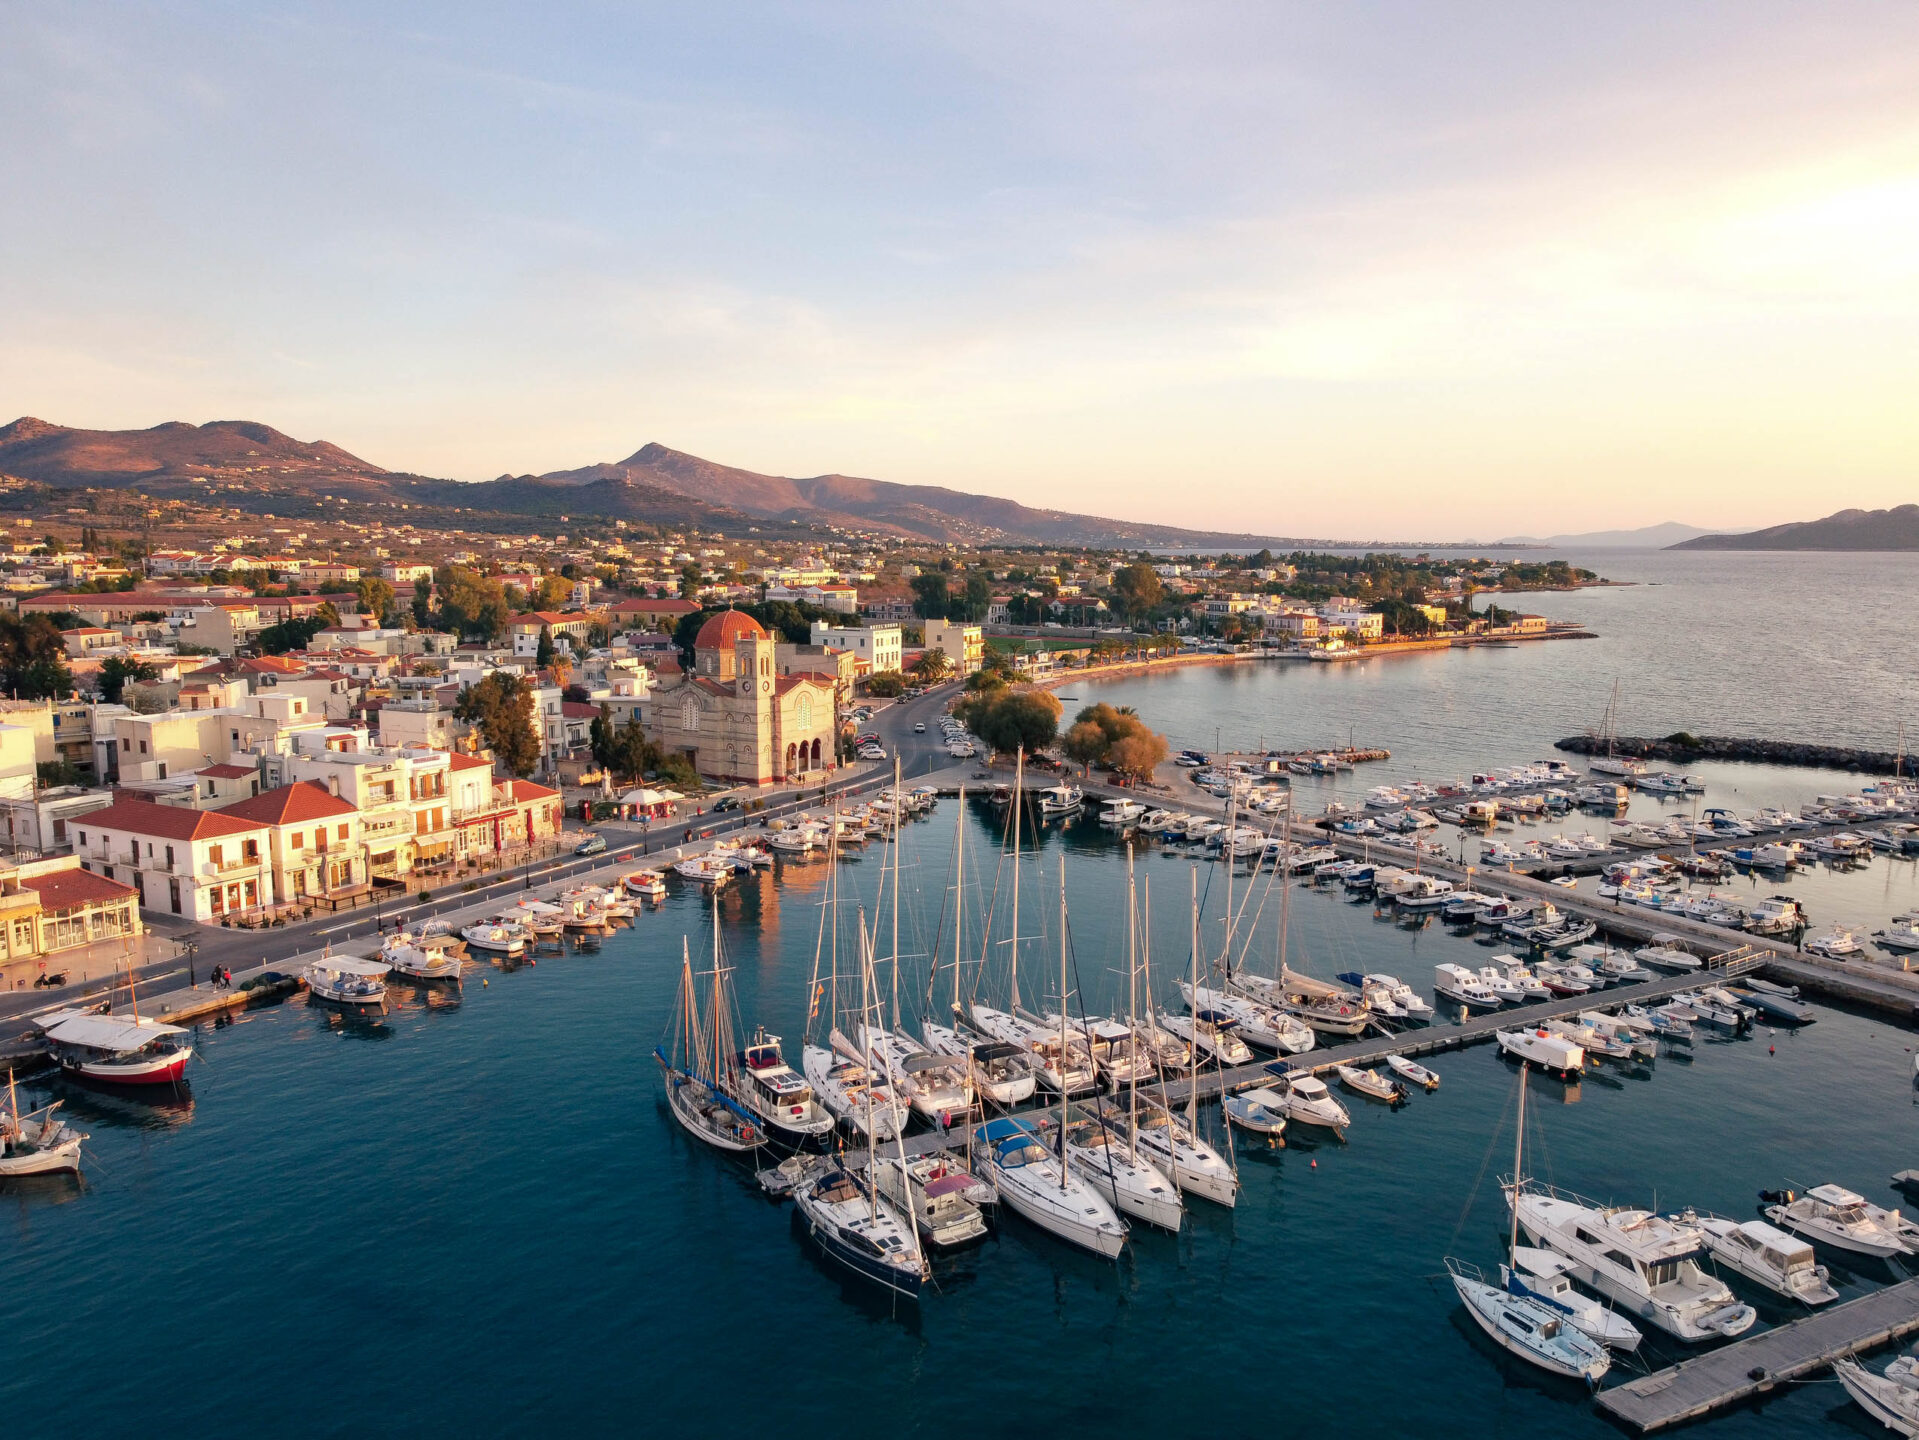 Our base: the port of Aegina